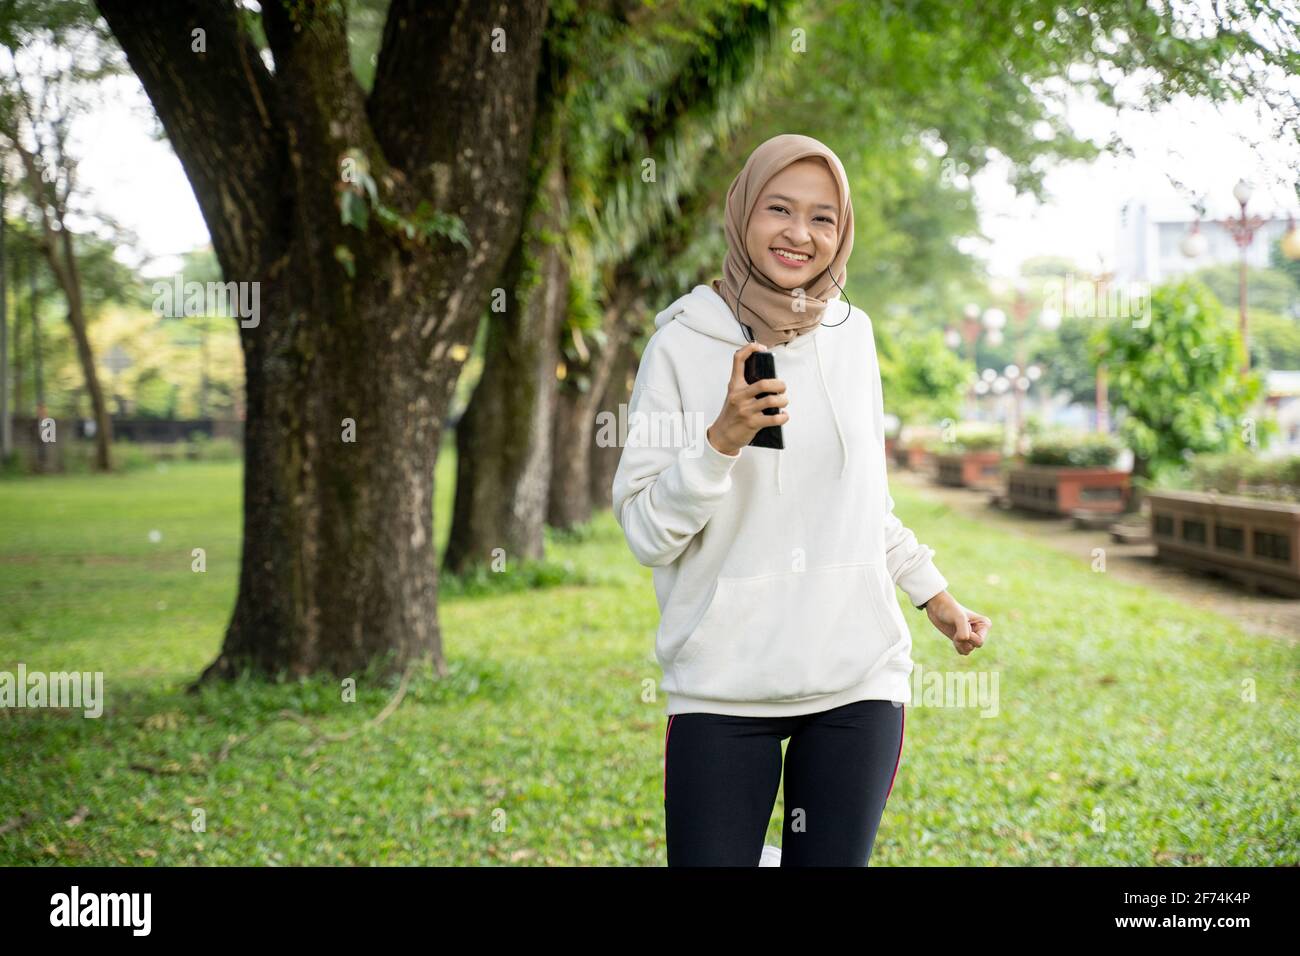 muslim woman running outdoor during ramadan fasting Stock Photo